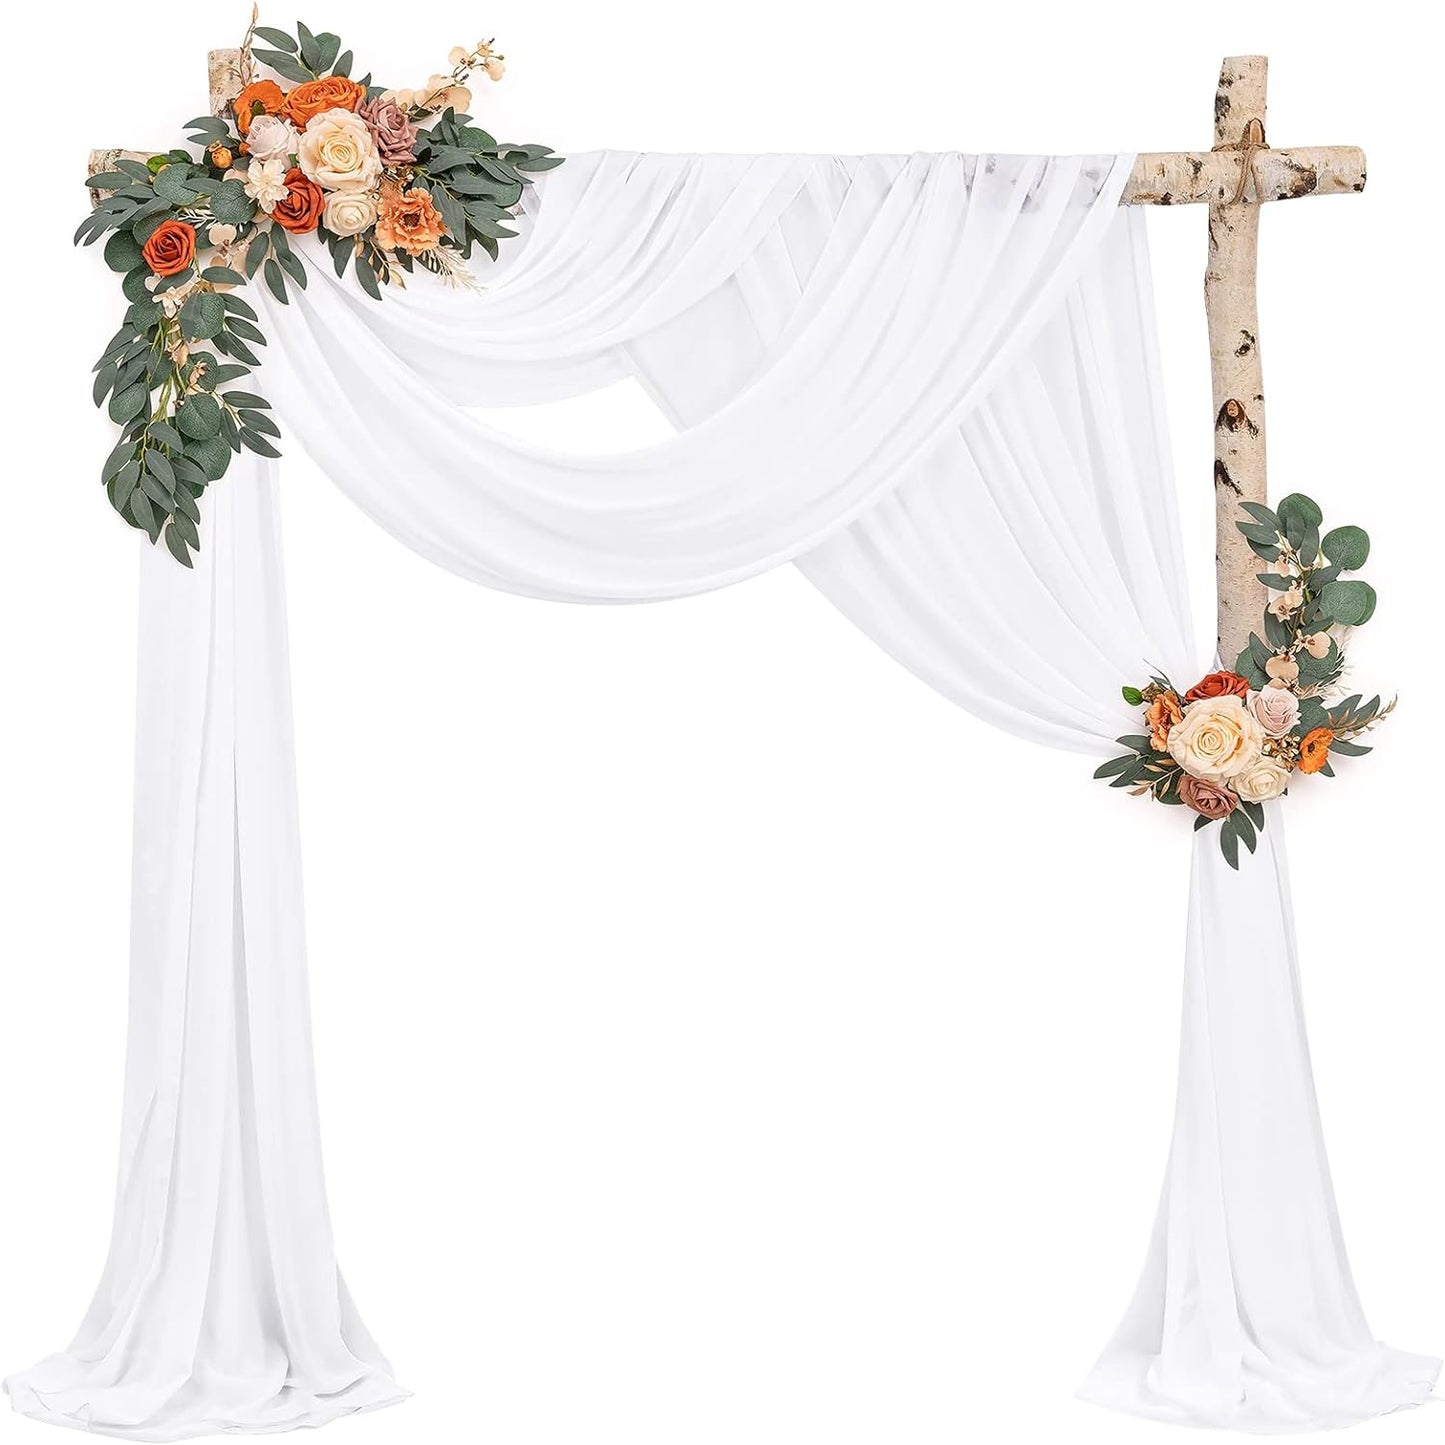 Wedding Arch Drapes for Ceremony Chiffon Fabric Drapes Arbor28"x20ft